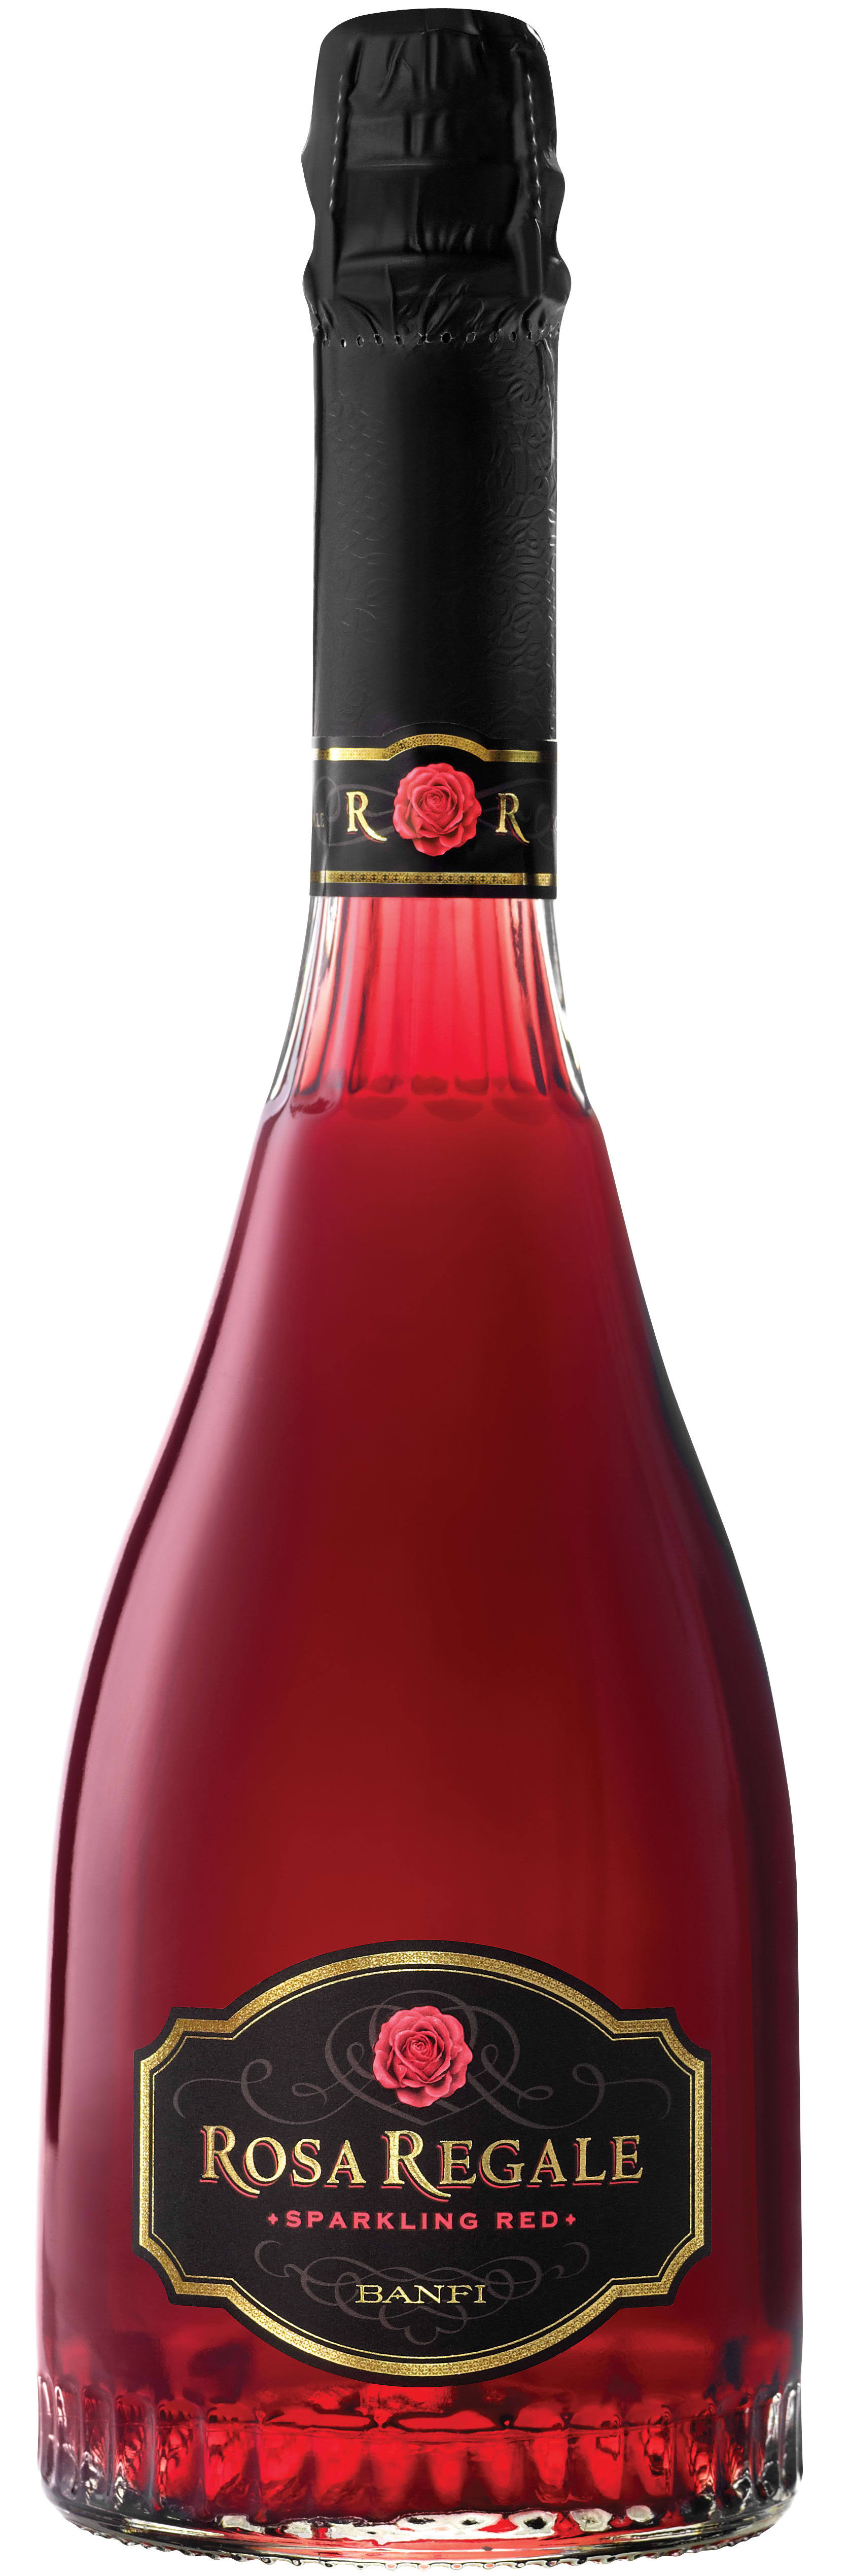 Banfi Rosa Regale Sparkling Red - 750 ml